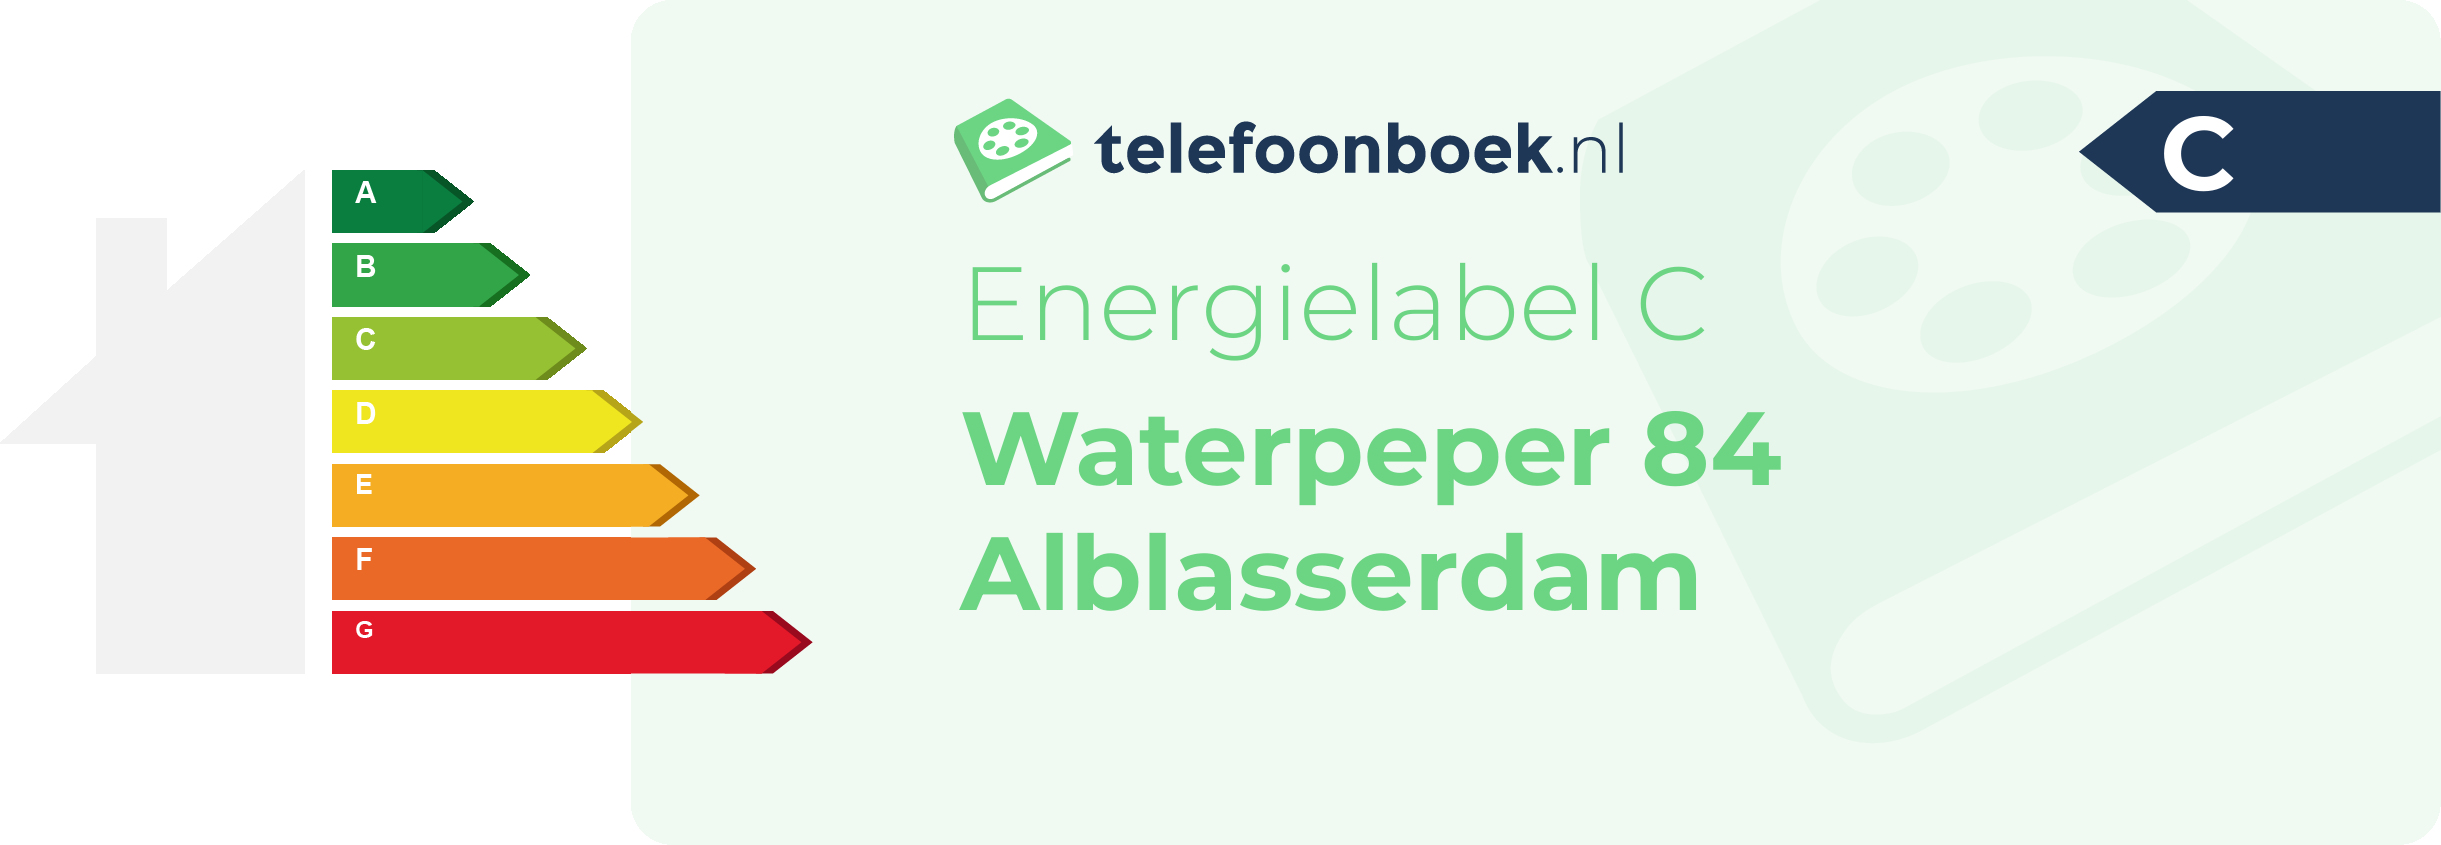 Energielabel Waterpeper 84 Alblasserdam